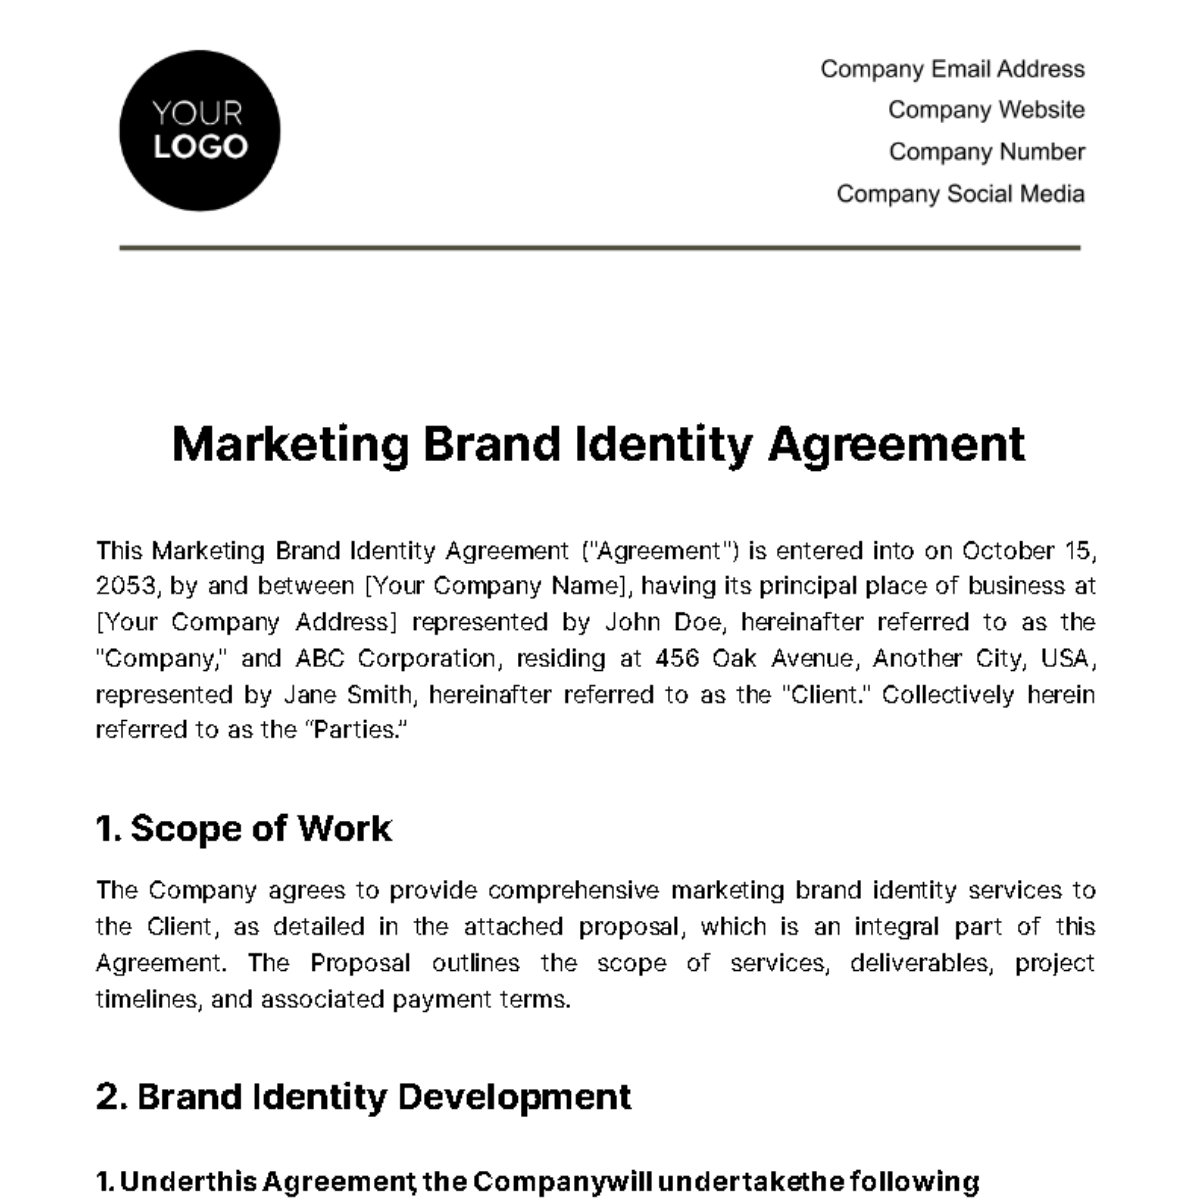 Marketing Brand Identity Agreement Template